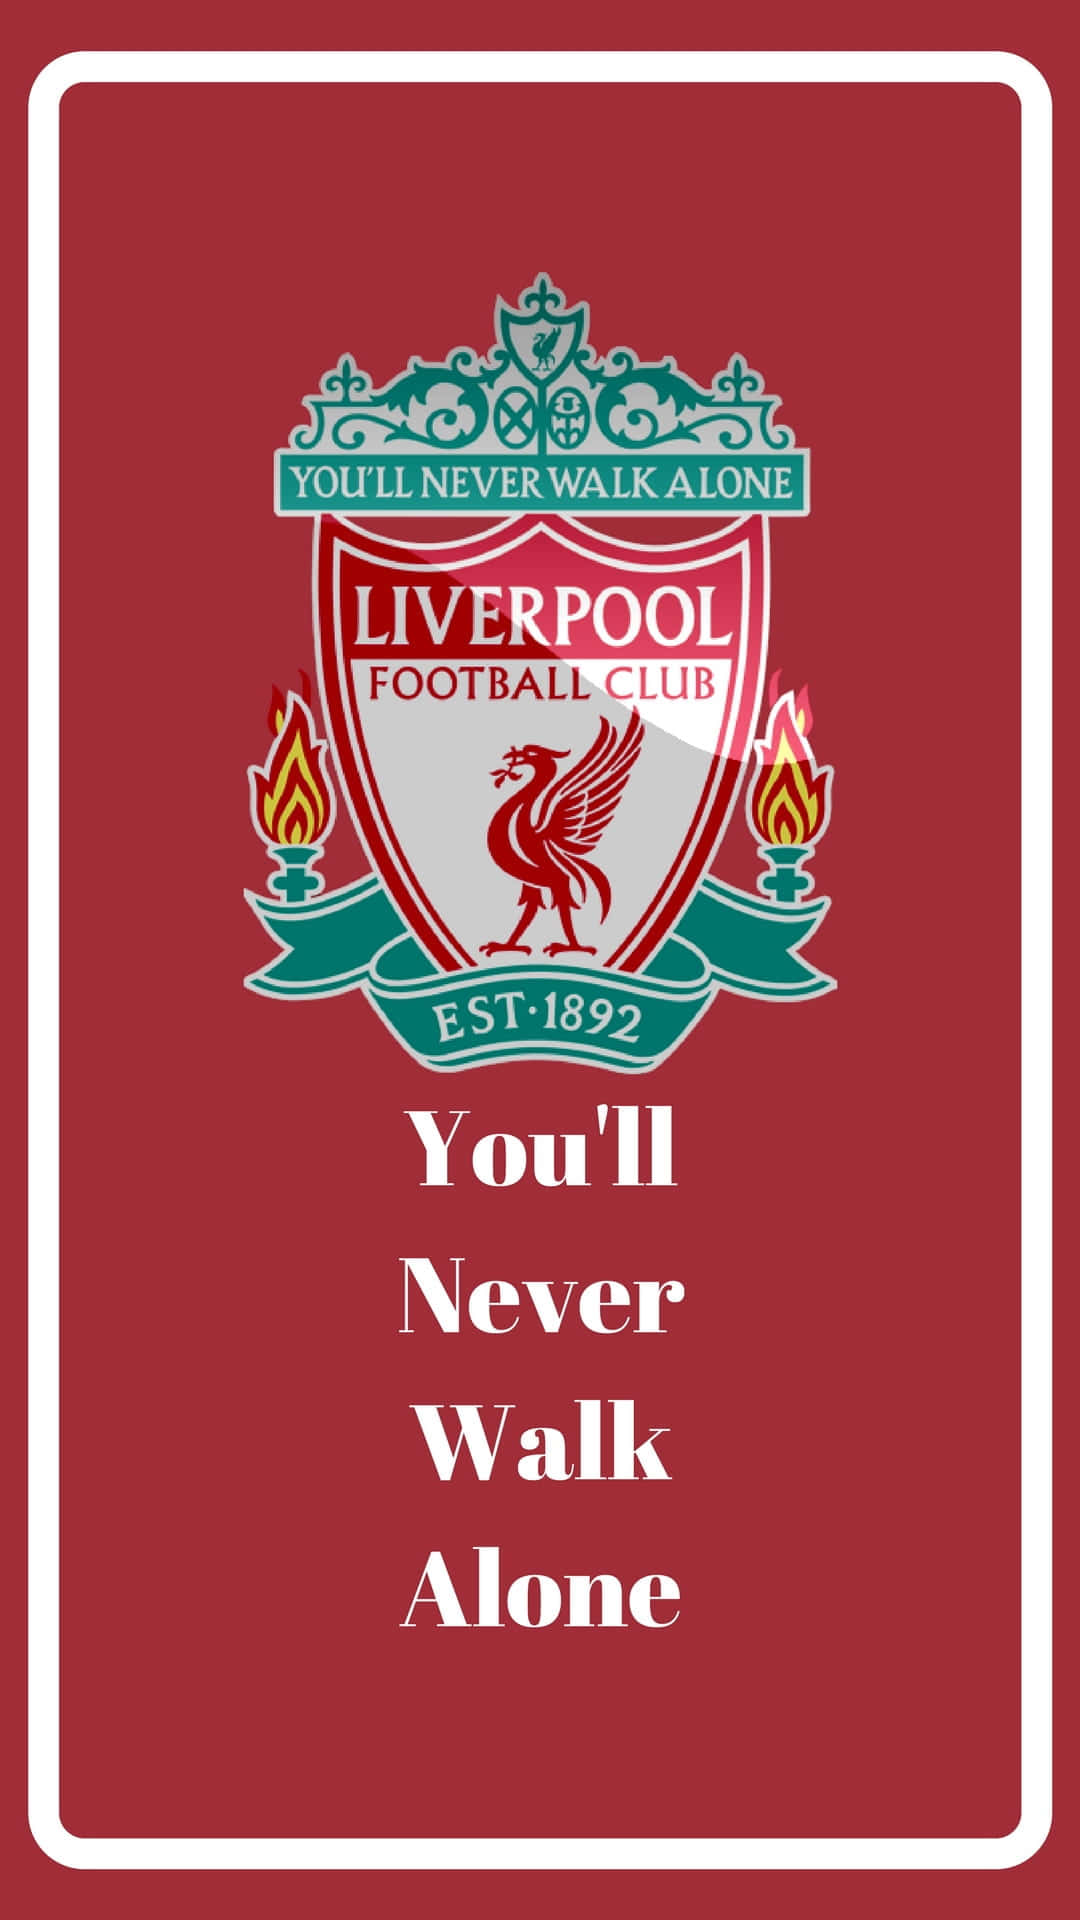 Liverpool Football Club Logo Wallpaper